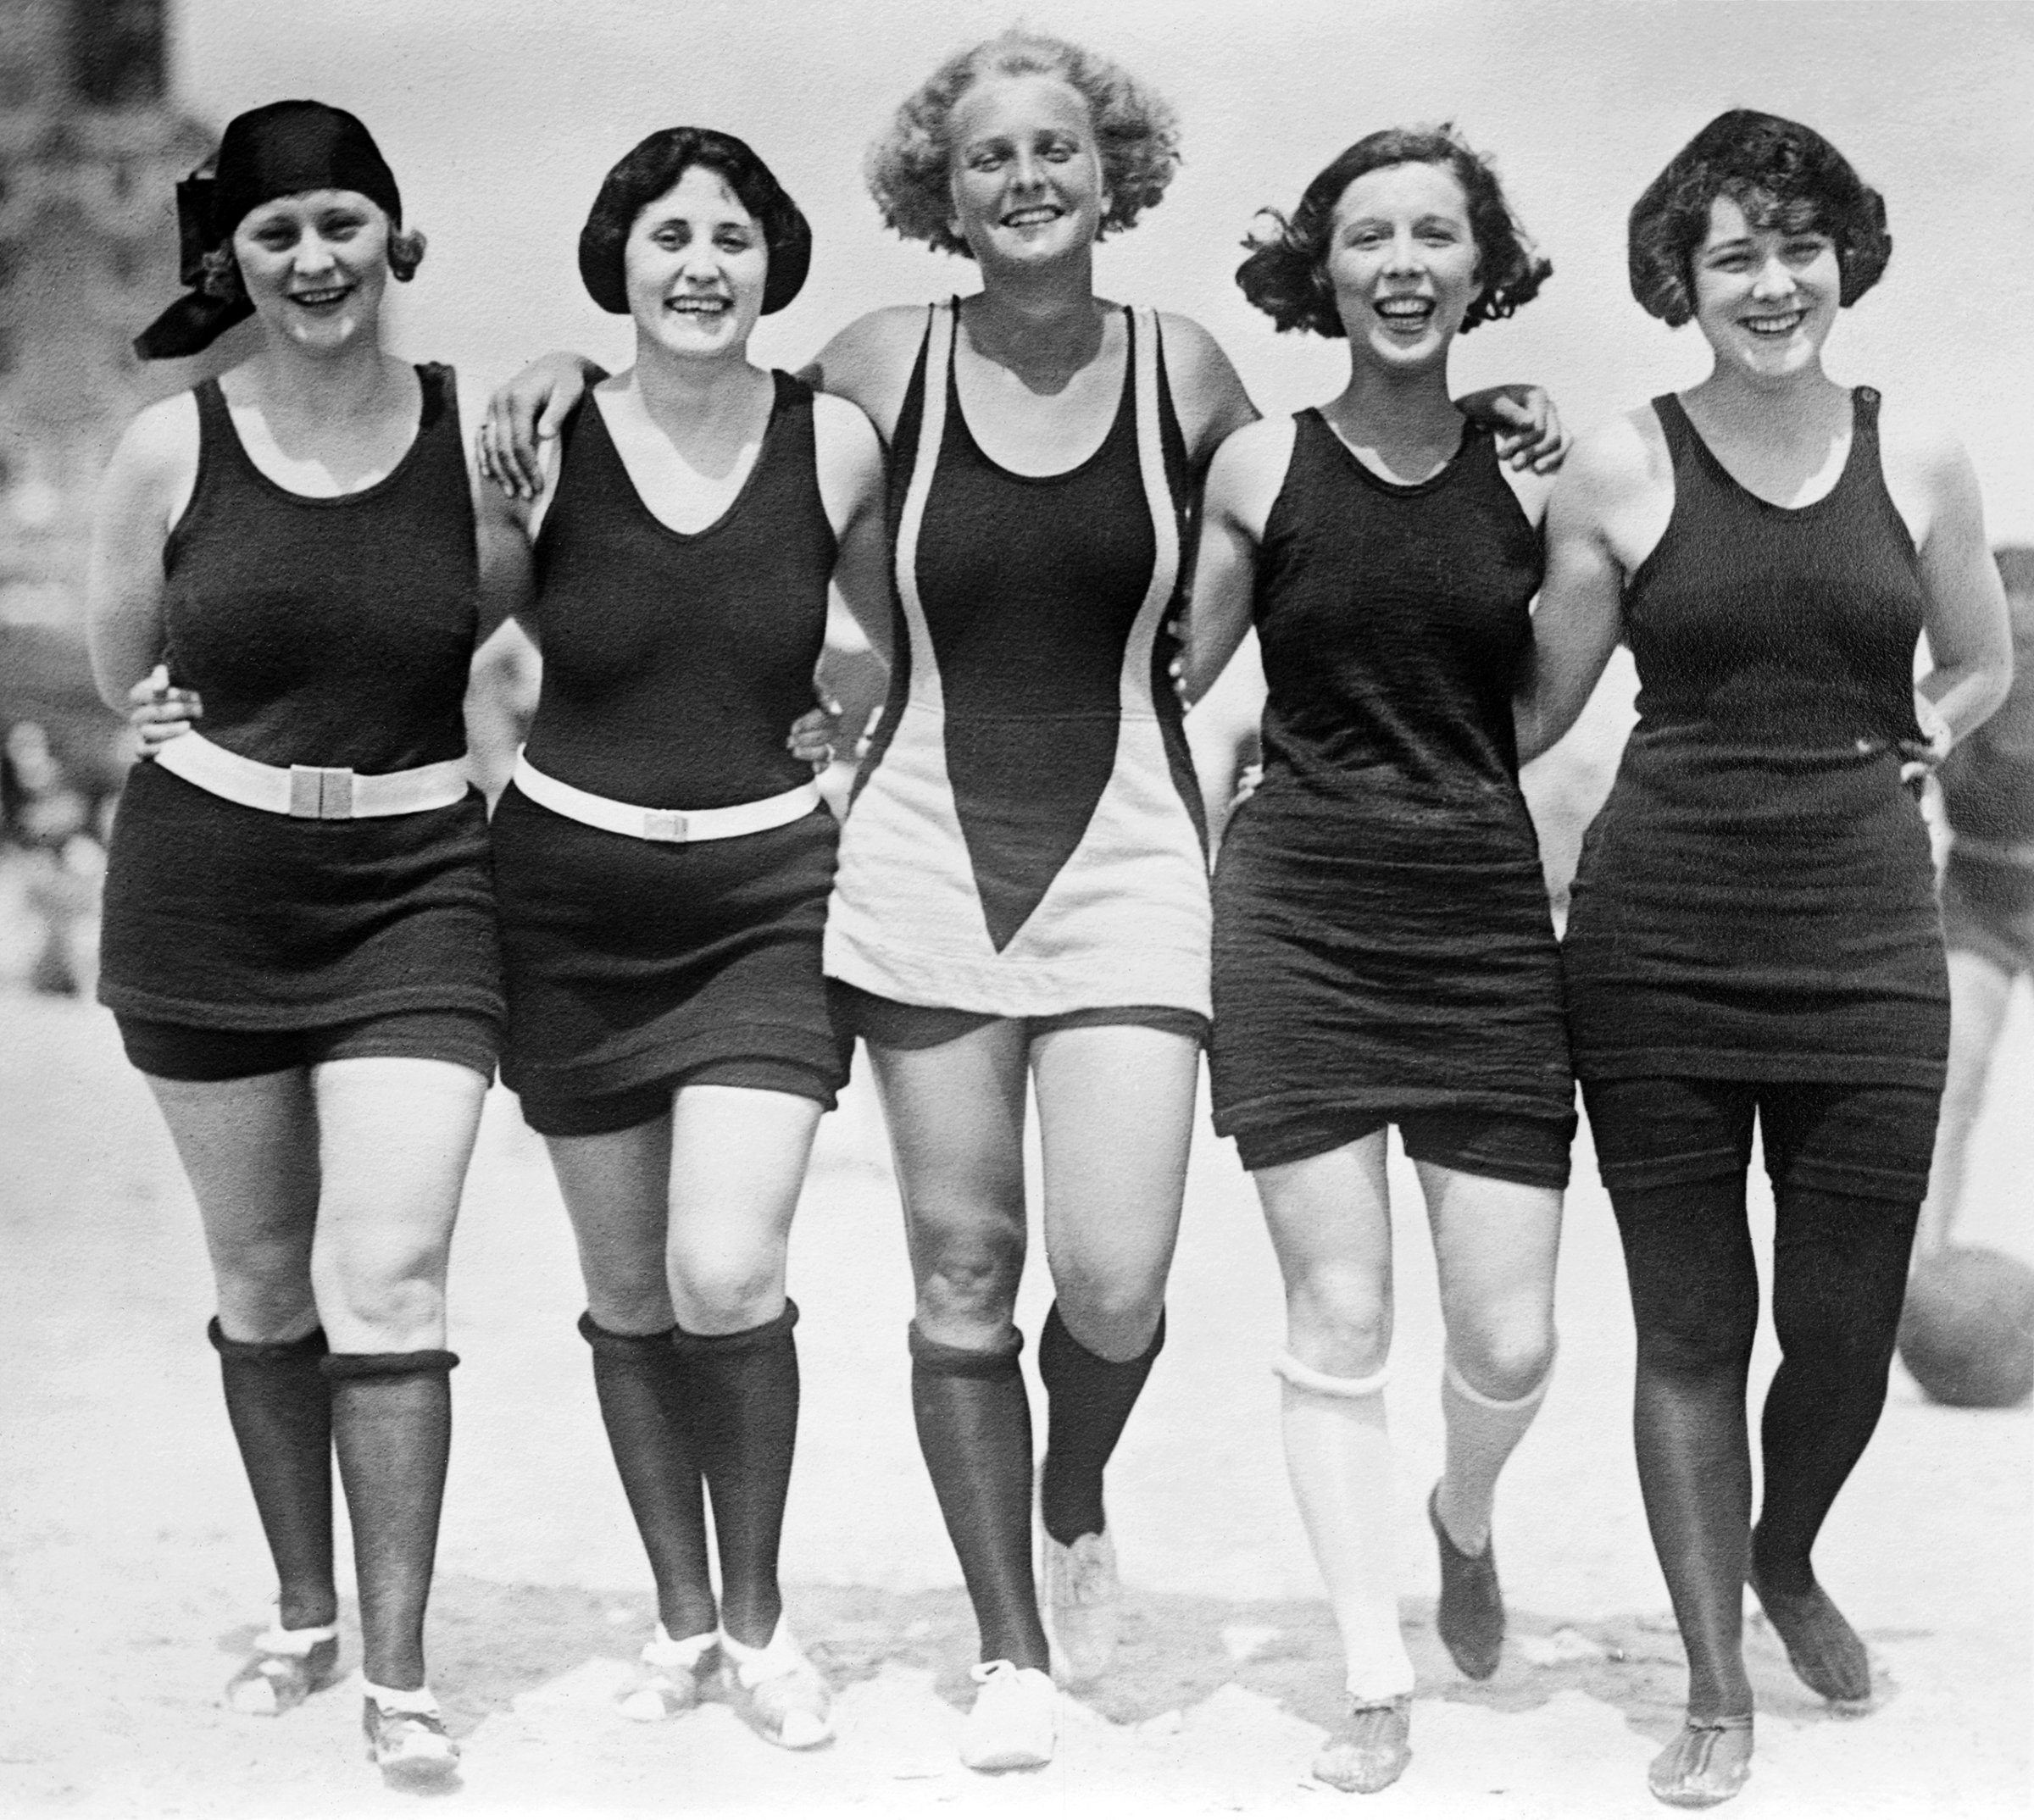 Five women walking arm-in-arm on the beach wearing wool bathing suits, circa 1925.